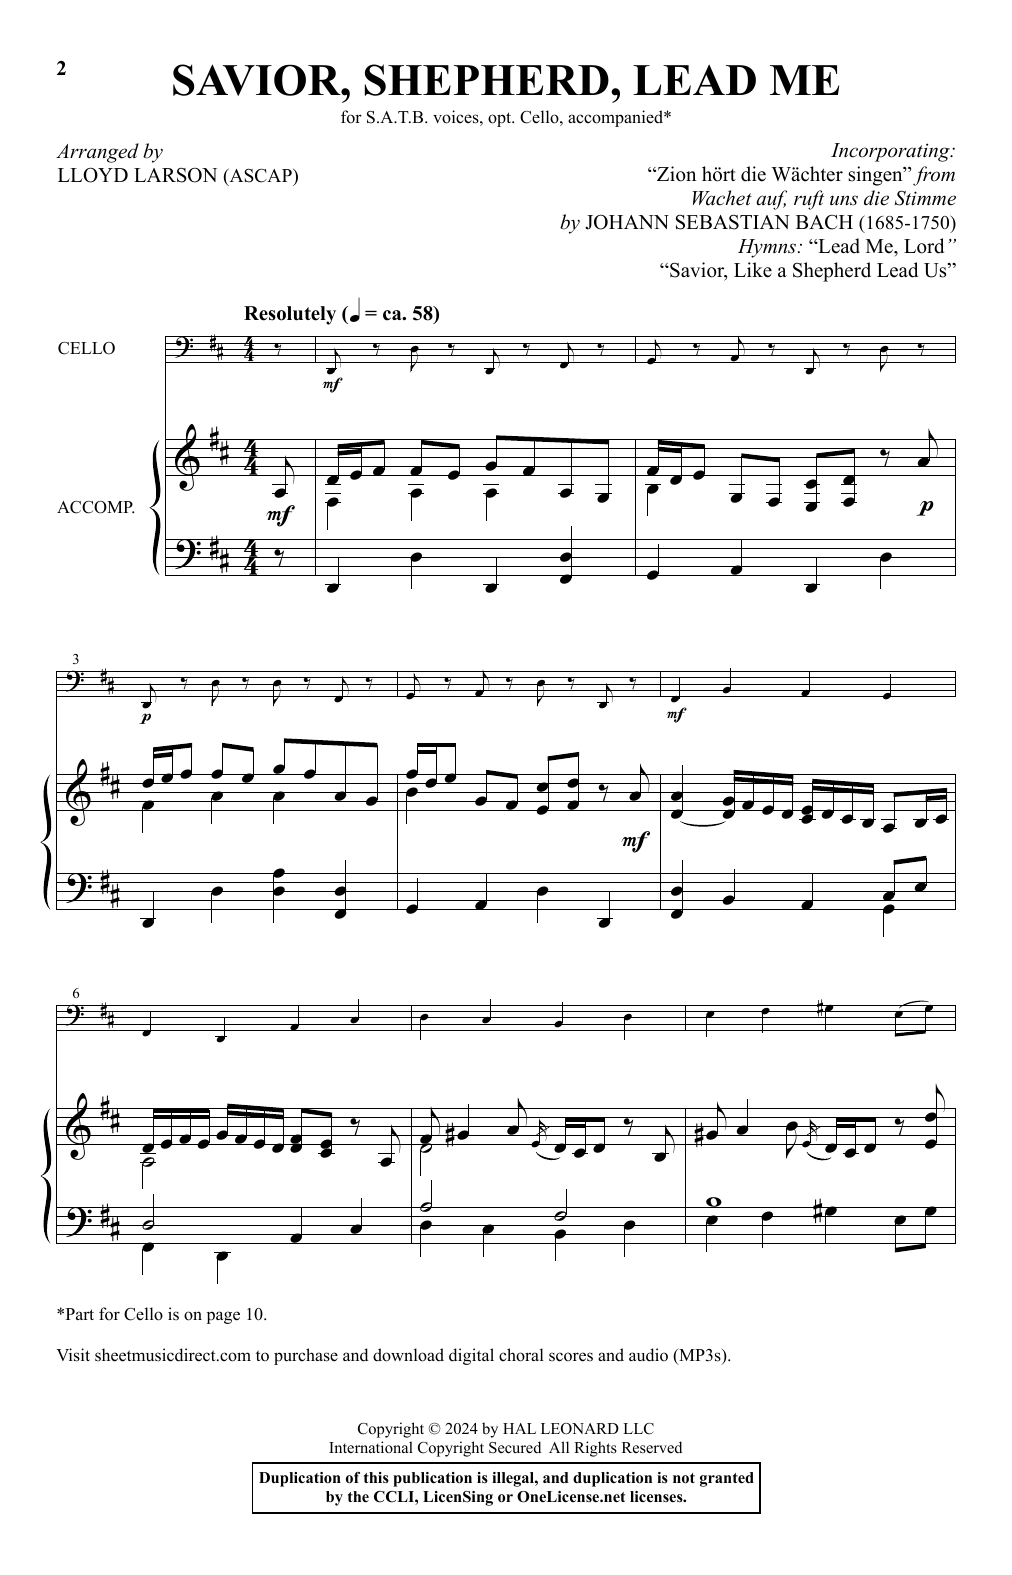 Download Lloyd Larson Savior, Shepherd, Lead Me Sheet Music and learn how to play SATB Choir PDF digital score in minutes